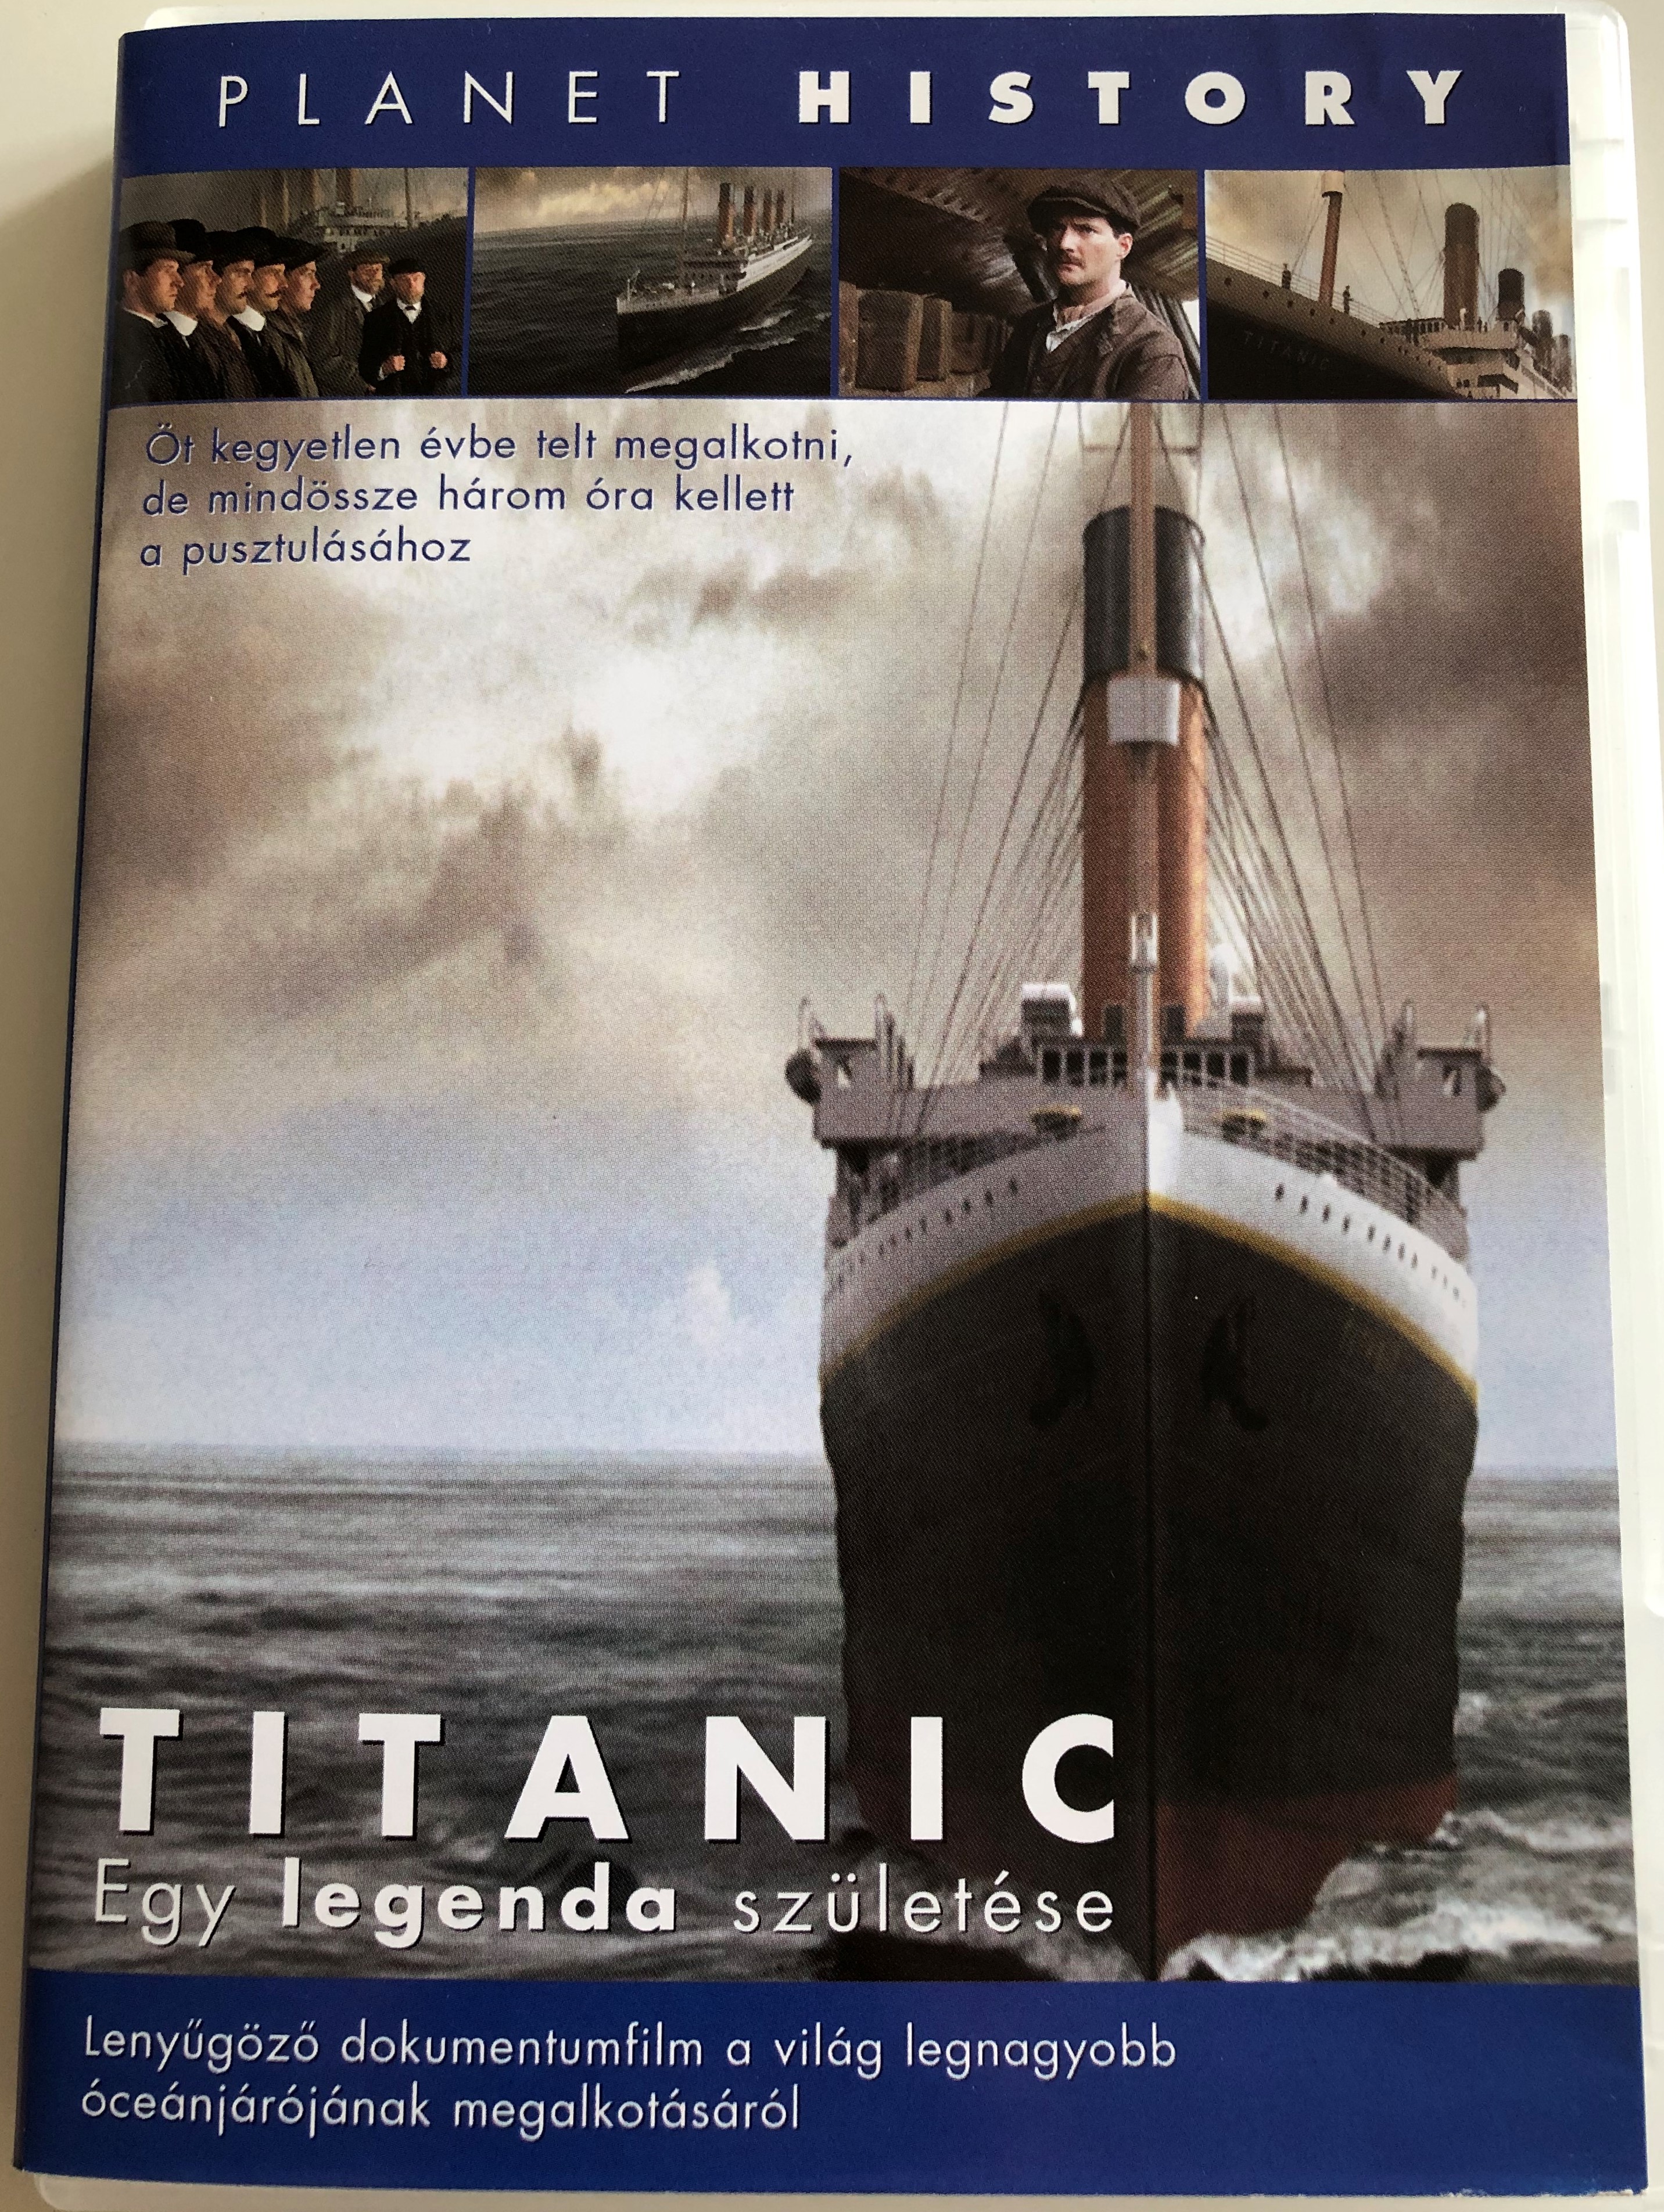 titanic-birth-of-a-legend-dvd-2007-titanic-egy-legenda-sz-let-se-planet-history-documentary-about-making-the-titanic-1-.jpg